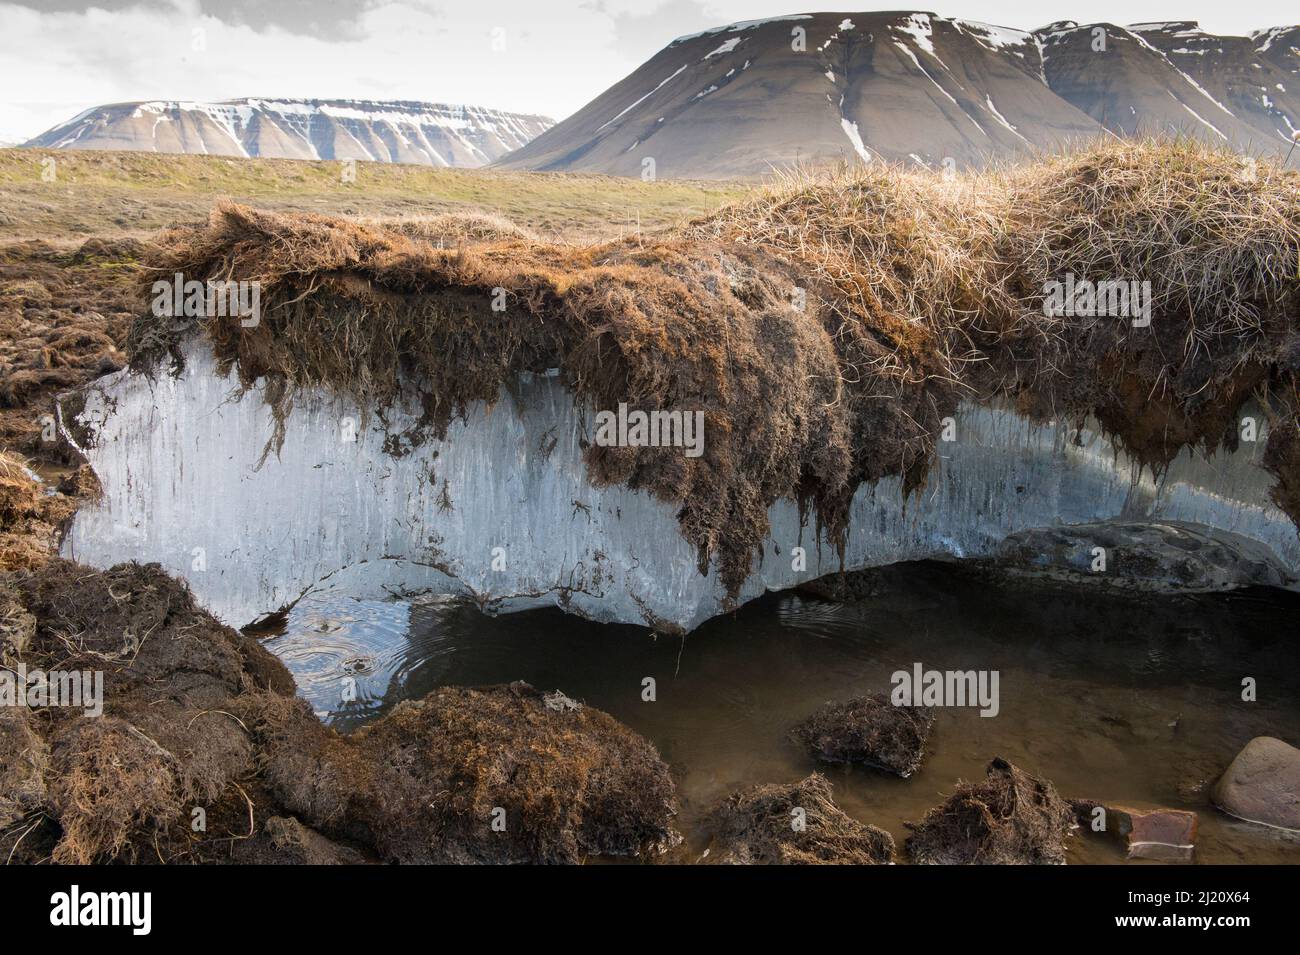 Pergélisol fondu exposé dans l'archipelego arctique de Svalbard, en Norvège. Juin 2016. Banque D'Images